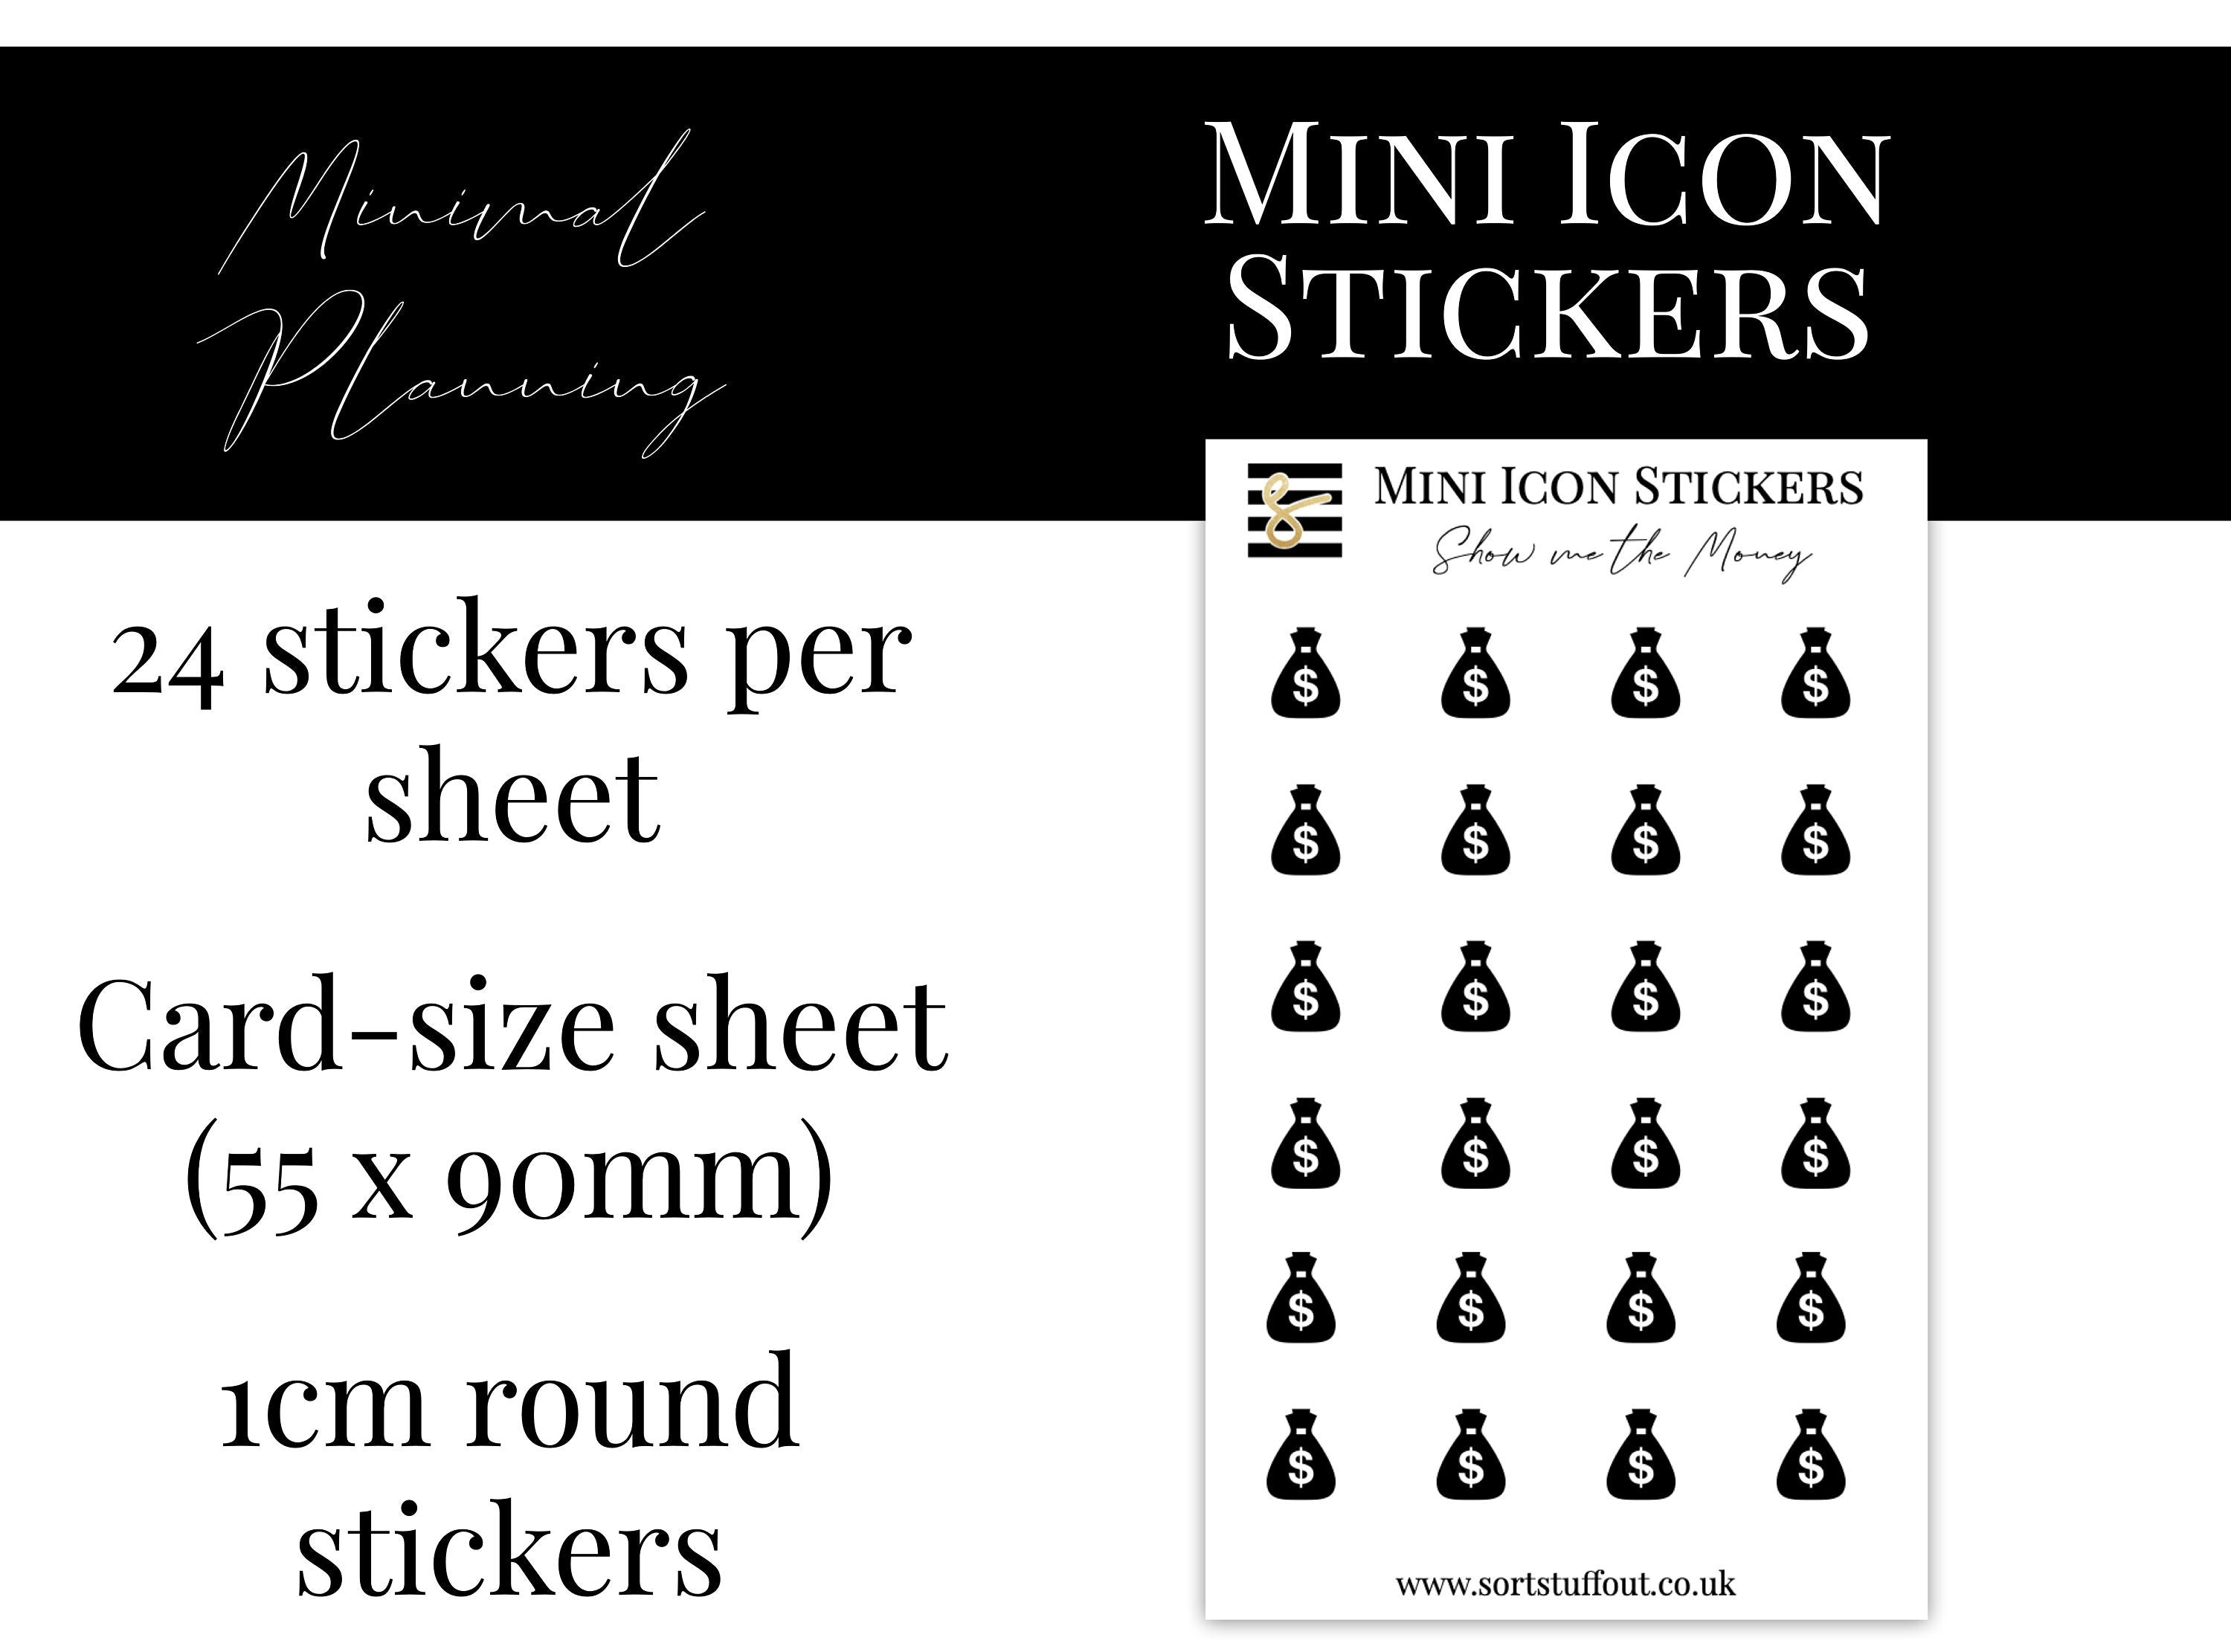 Mini Icon Stickers - Show me the Money